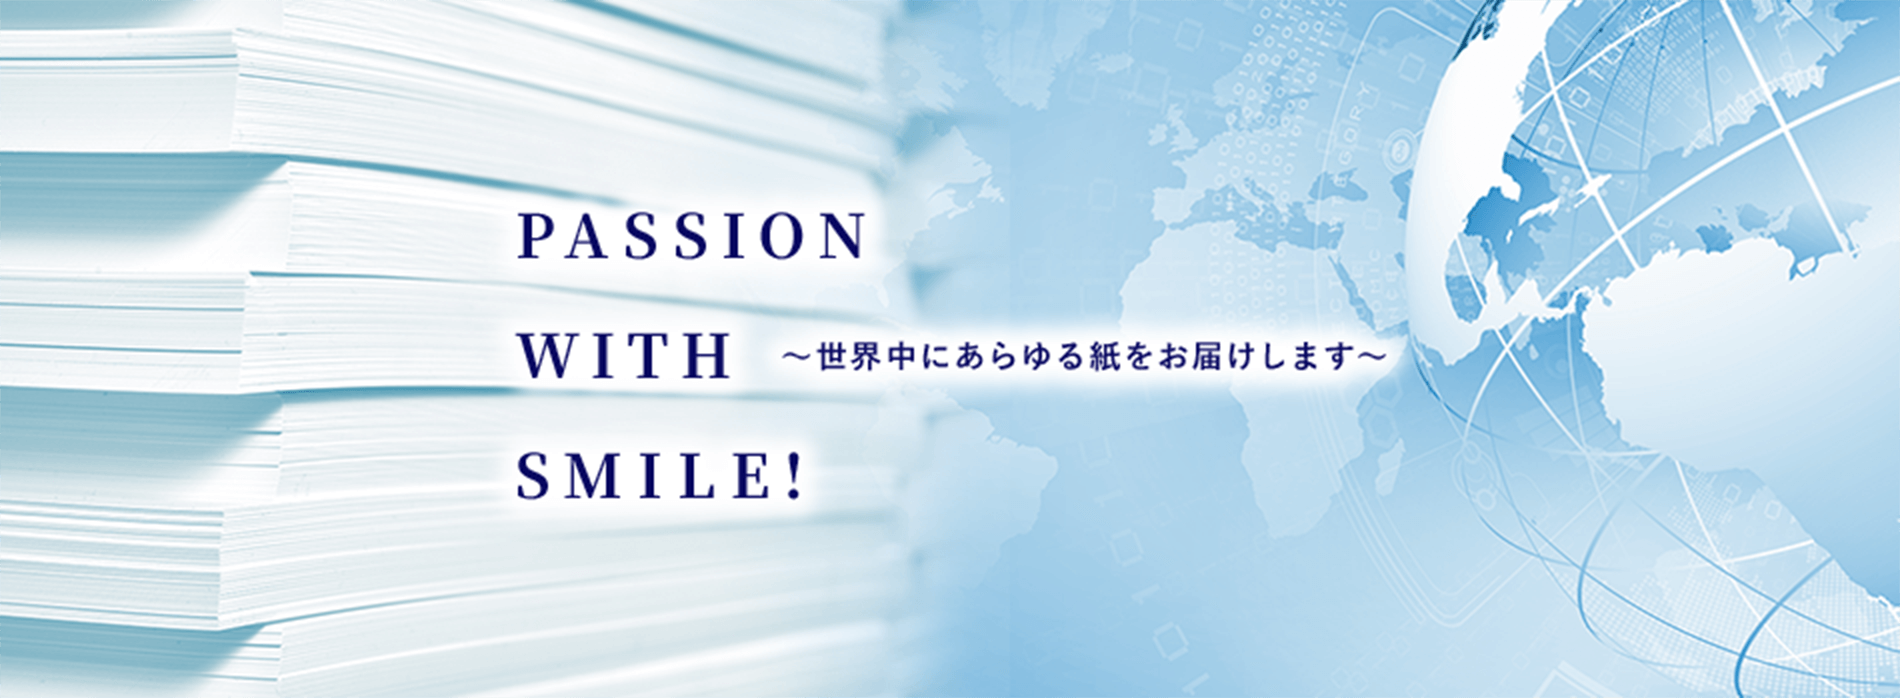 PASSION WITH SMILE!
世界中にあらゆる紙をお届けします